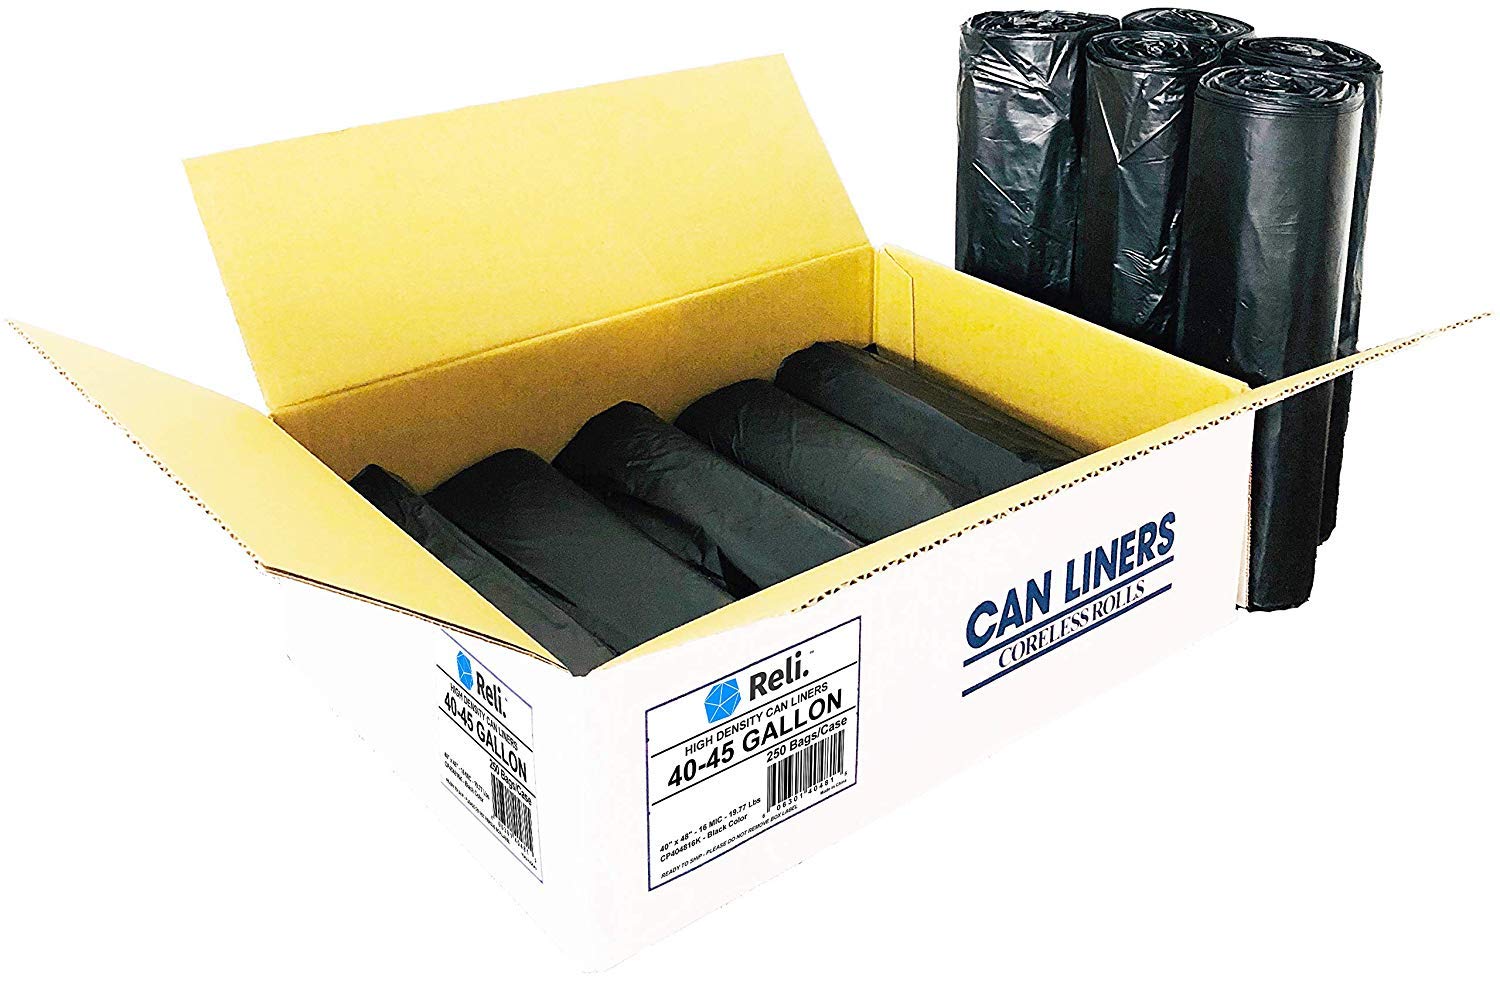 Reli. 16-25 Gallon Trash Bags (500 Count Bulk) Black Garbage Bags 25 Gallon Strength (16 Gallon - 20 Gallon - 25 Gallon